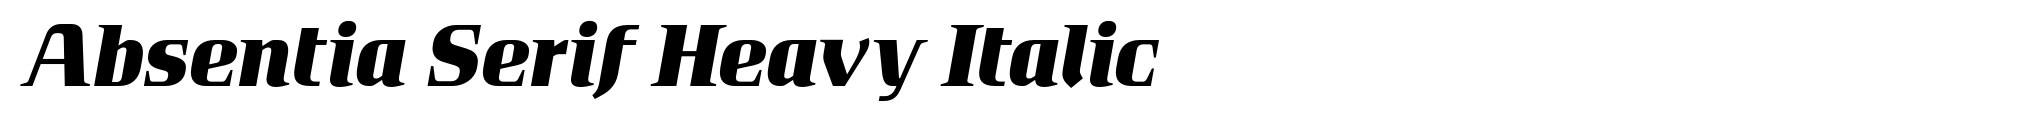 Absentia Serif Heavy Italic image